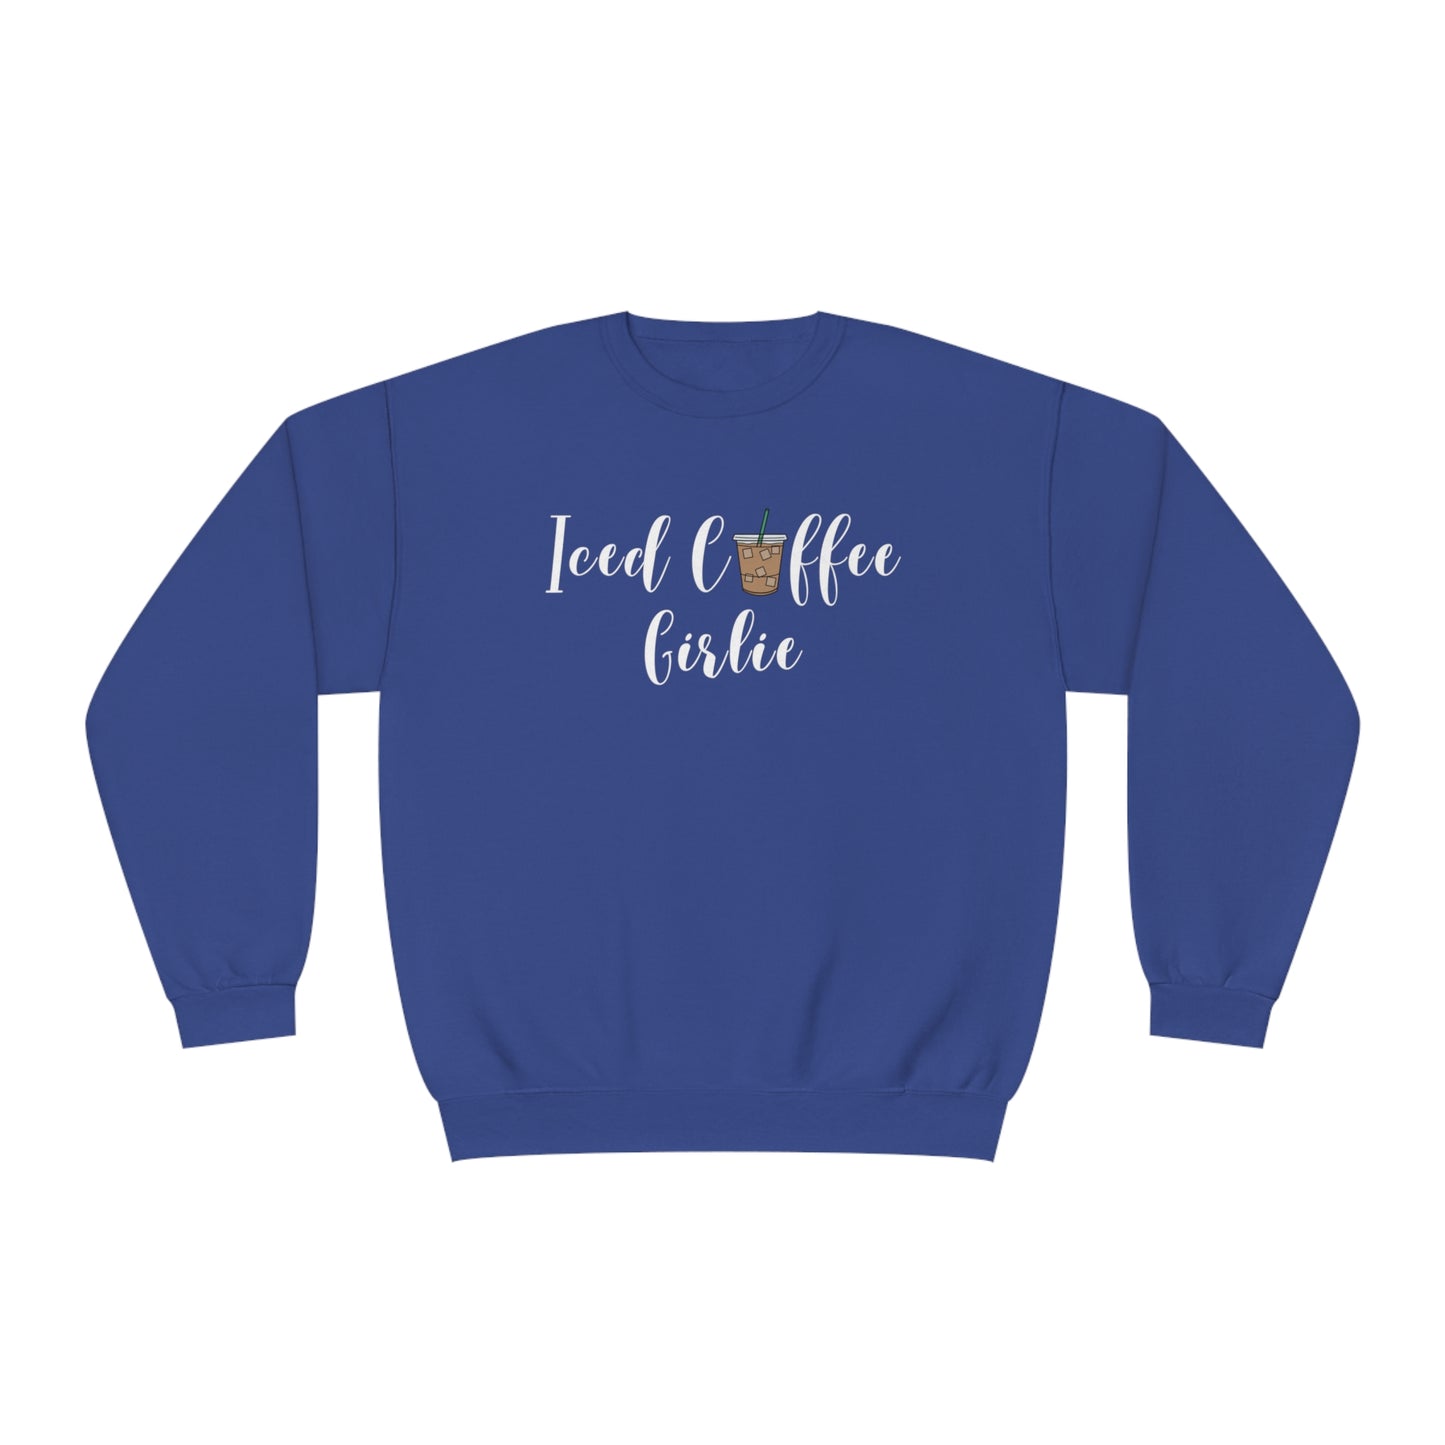 Iced Coffee Girlie Sweatshirt